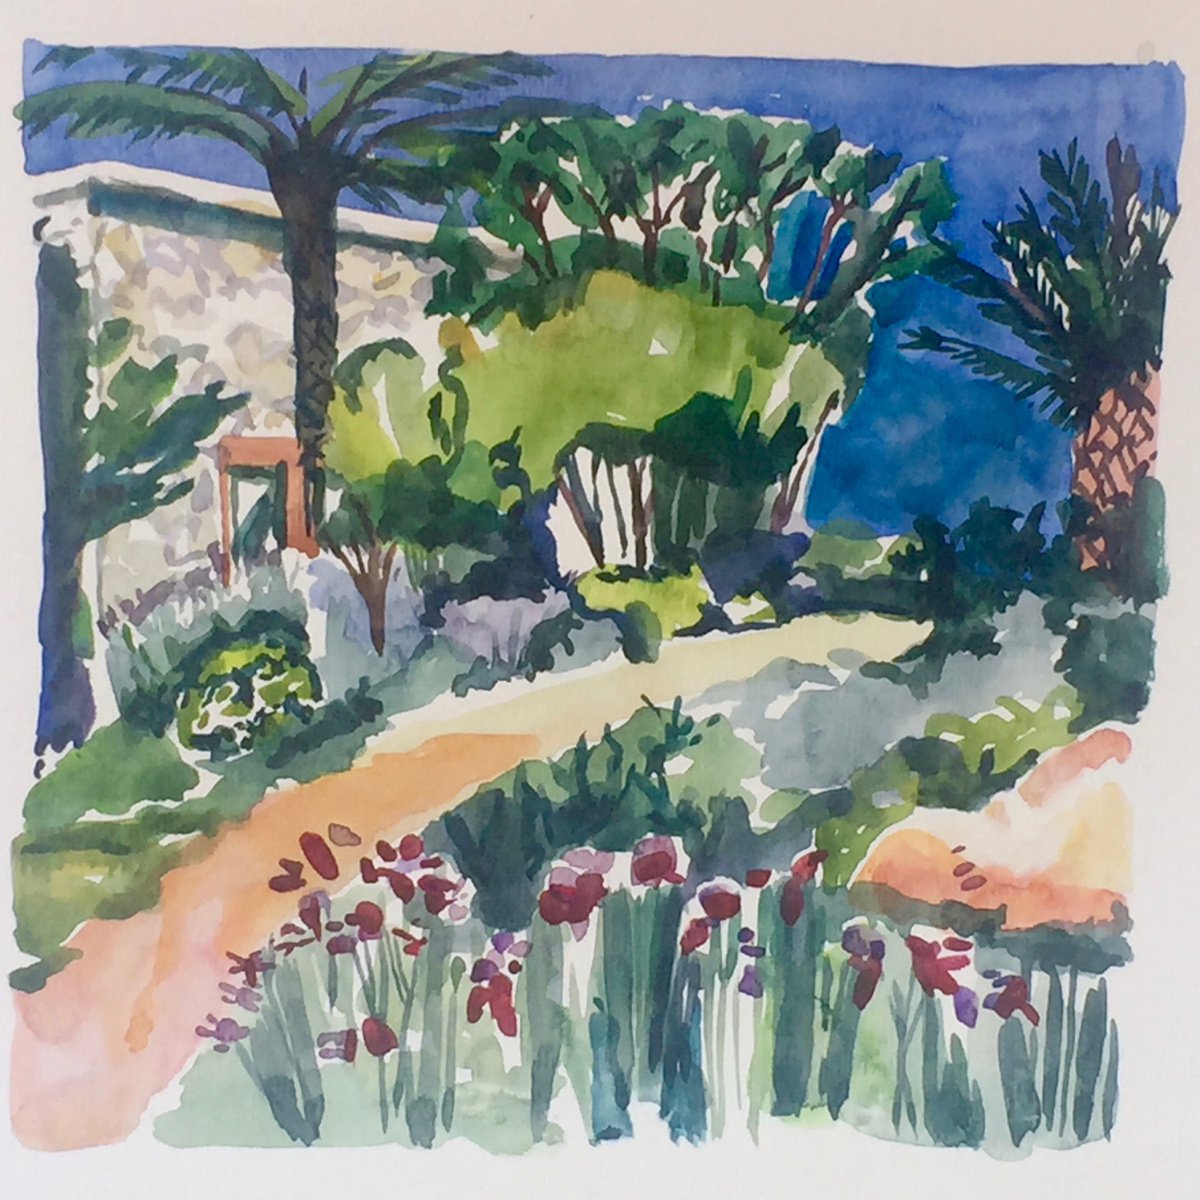 View across the landscape to a farmhouse, Menorca - Baleariac Islands by Annie Meier